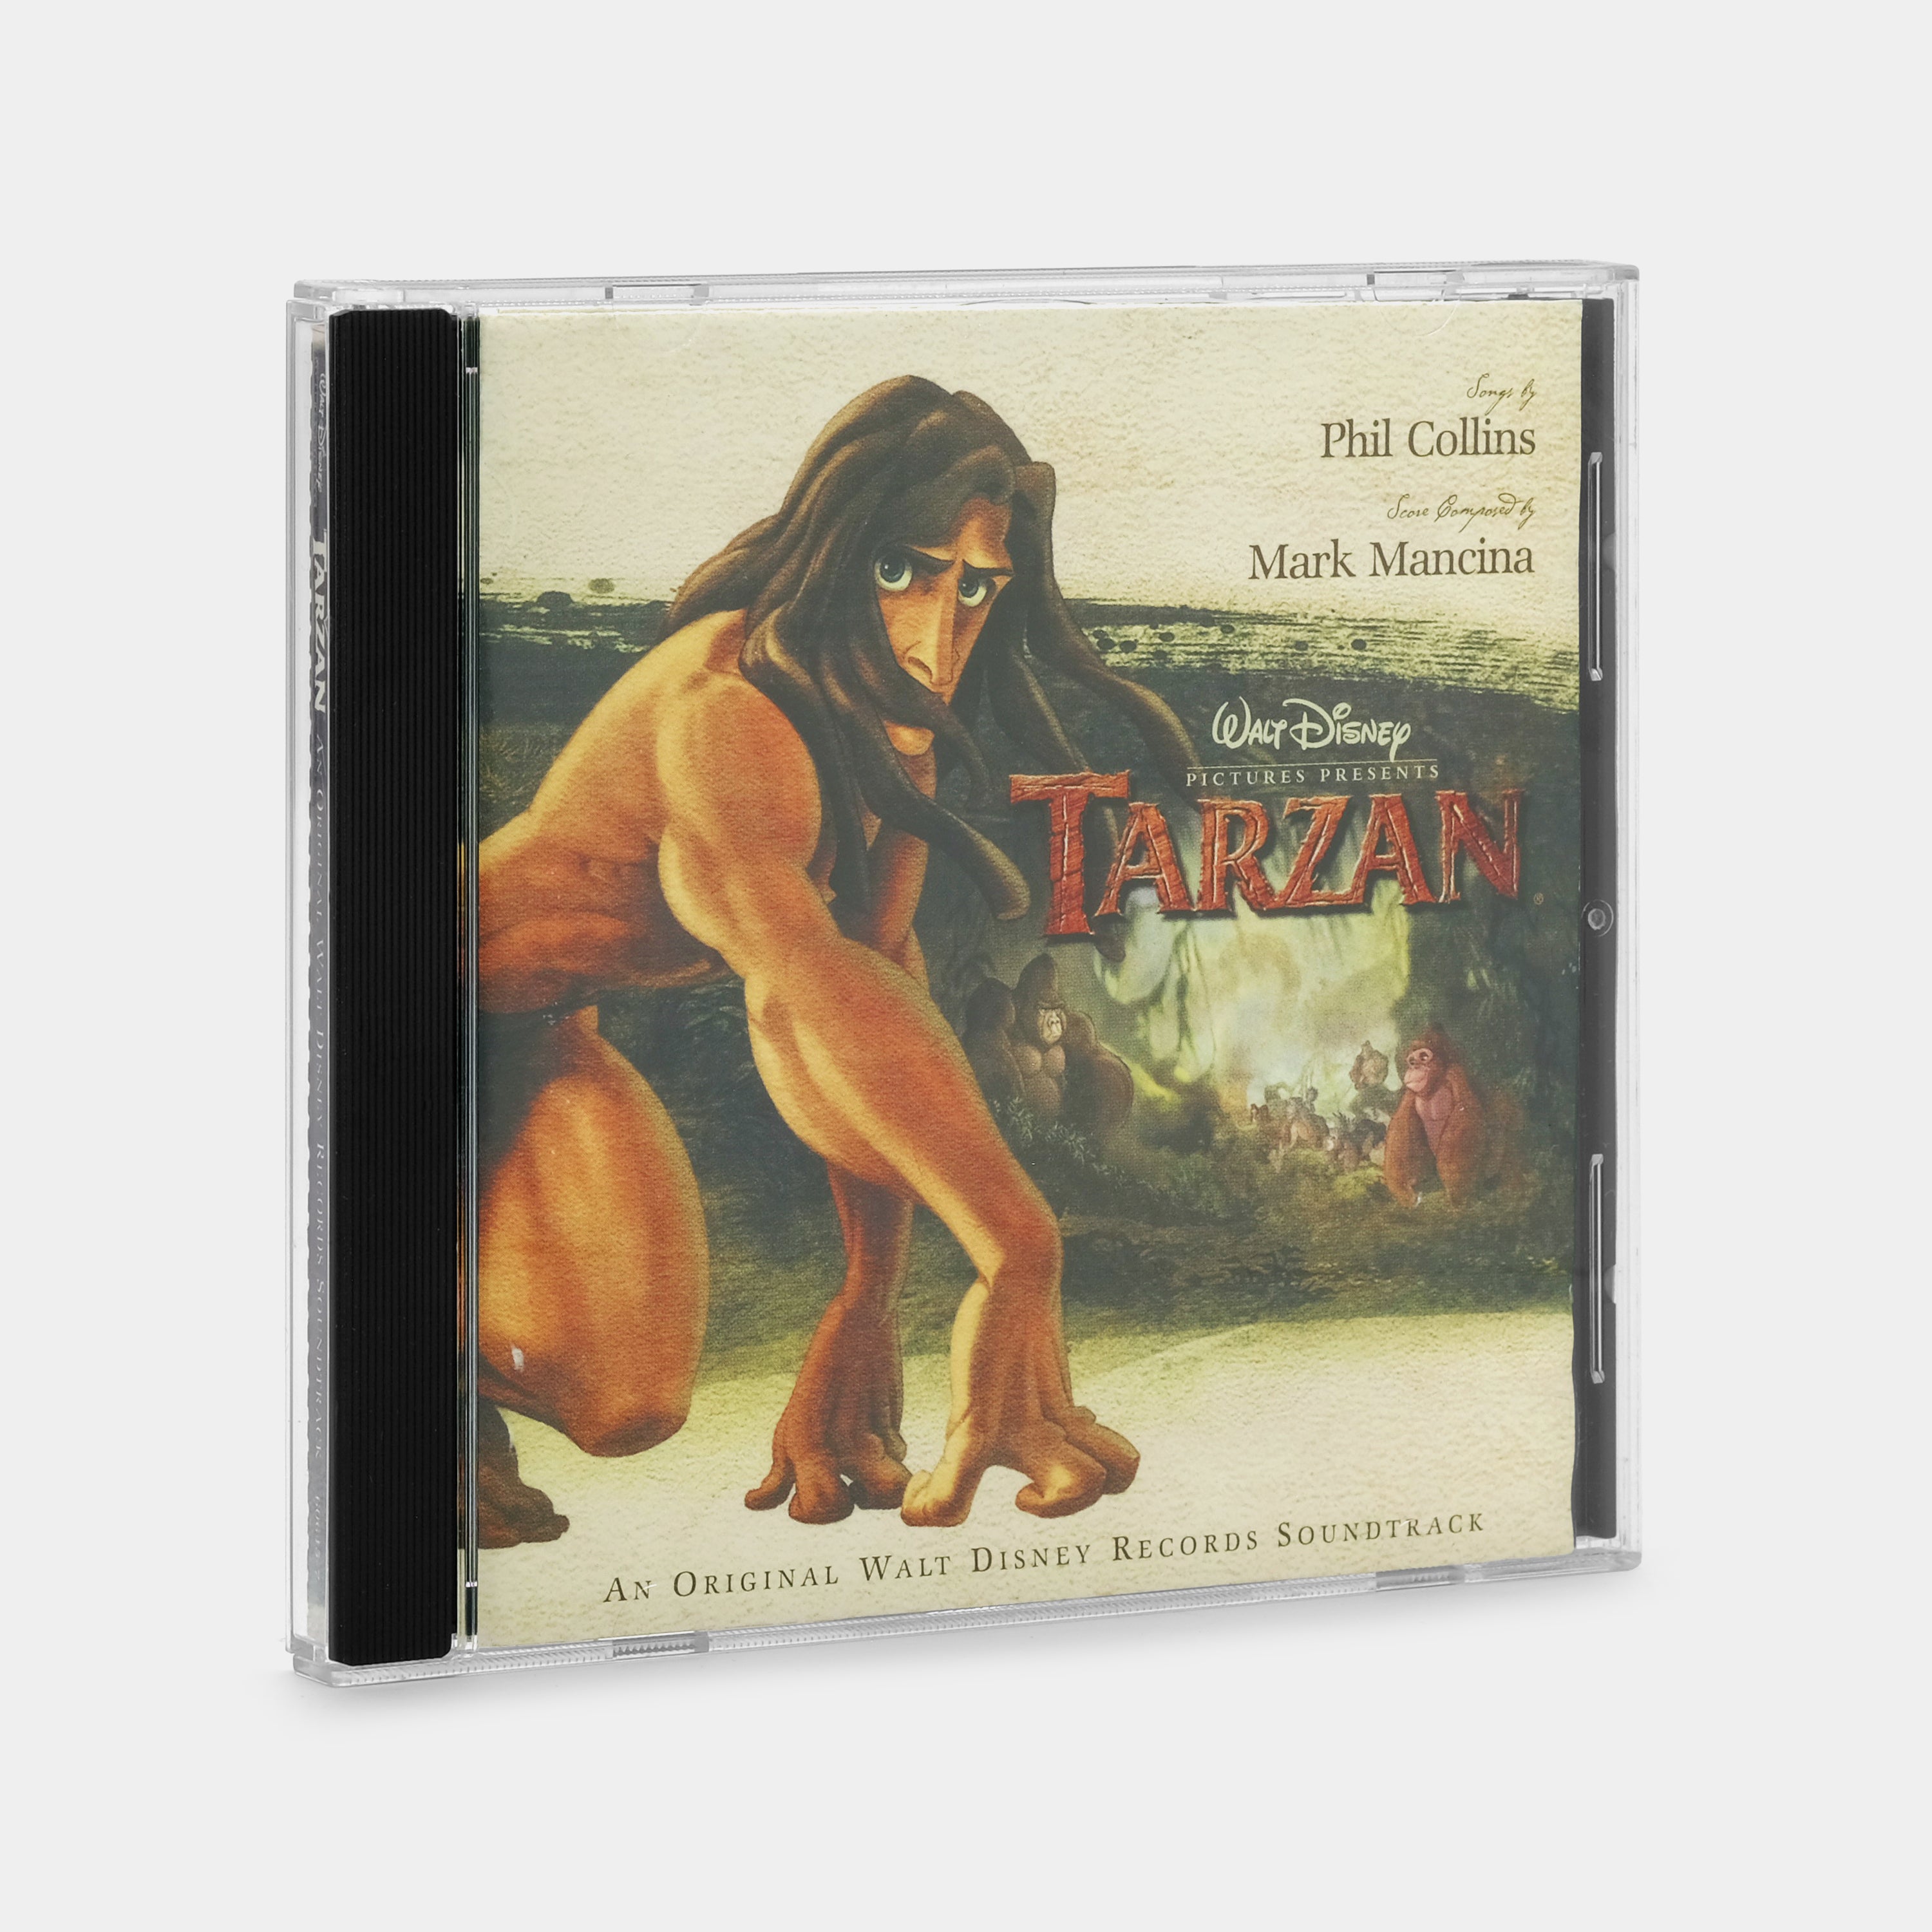 Phil Collins, Mark Mancina - Tarzan (An Original Walt Disney Records Soundtrack) CD